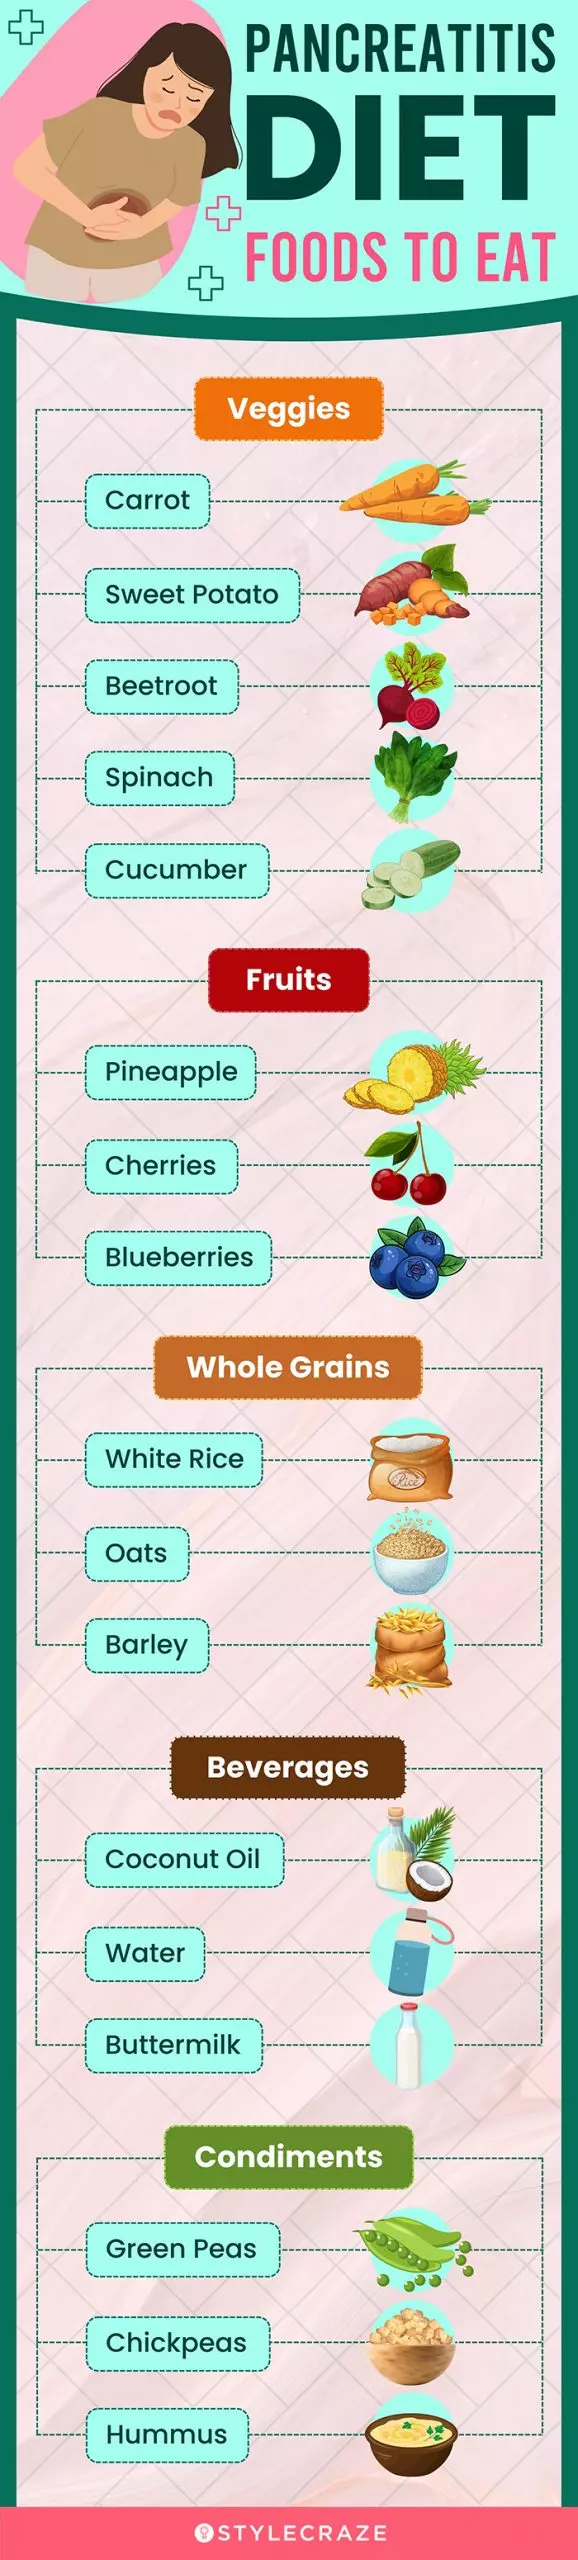 pancreatitis diet foods to eat (infographic)